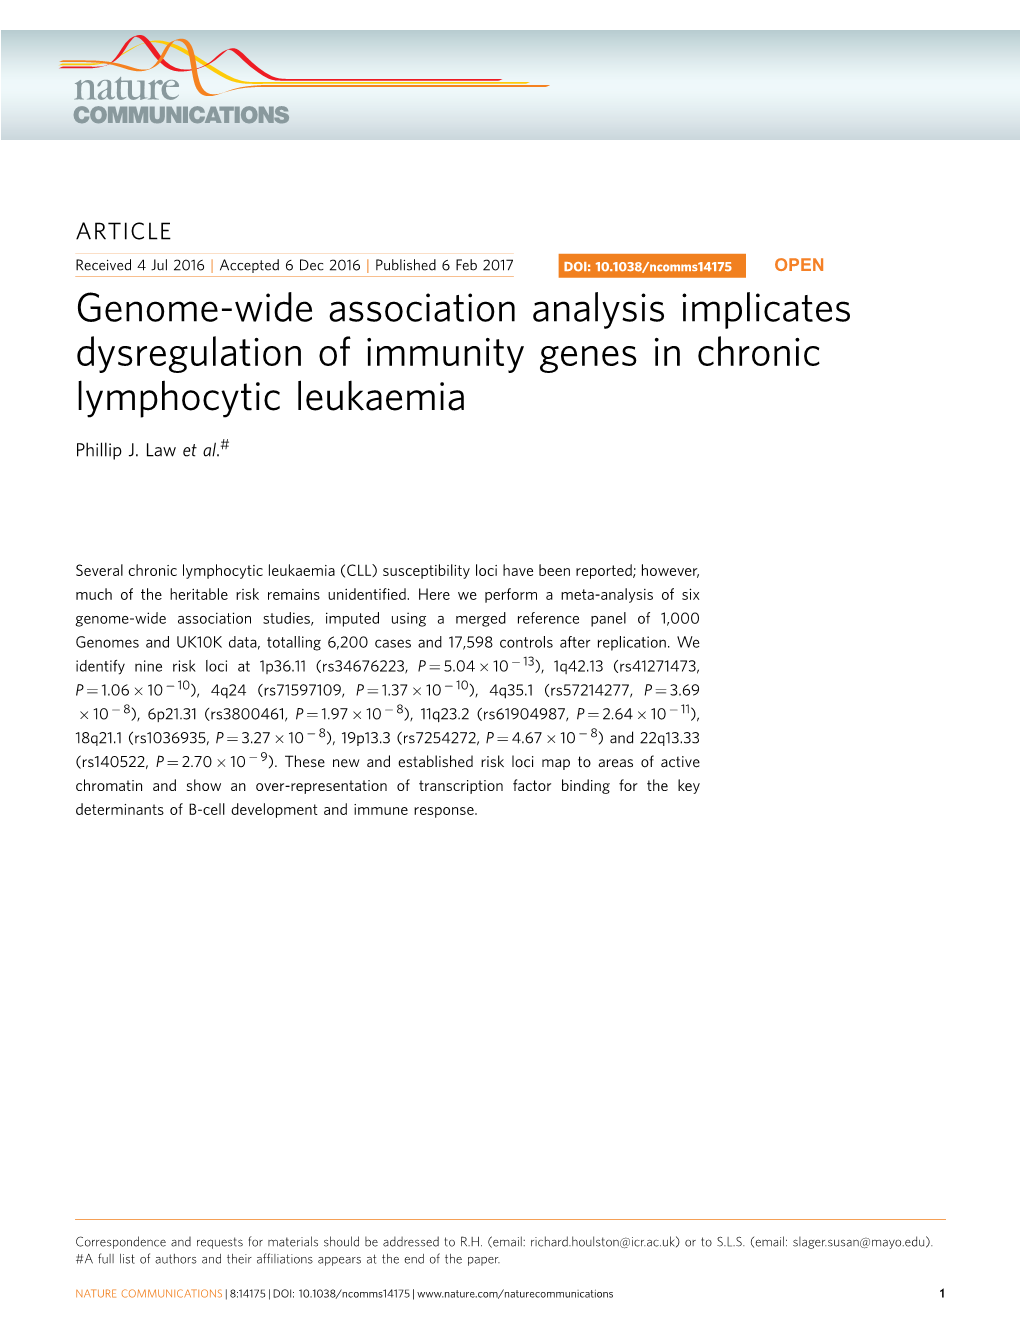 Genome-Wide Association Analysis Implicates Dysregulation of Immunity Genes in Chronic Lymphocytic Leukaemia